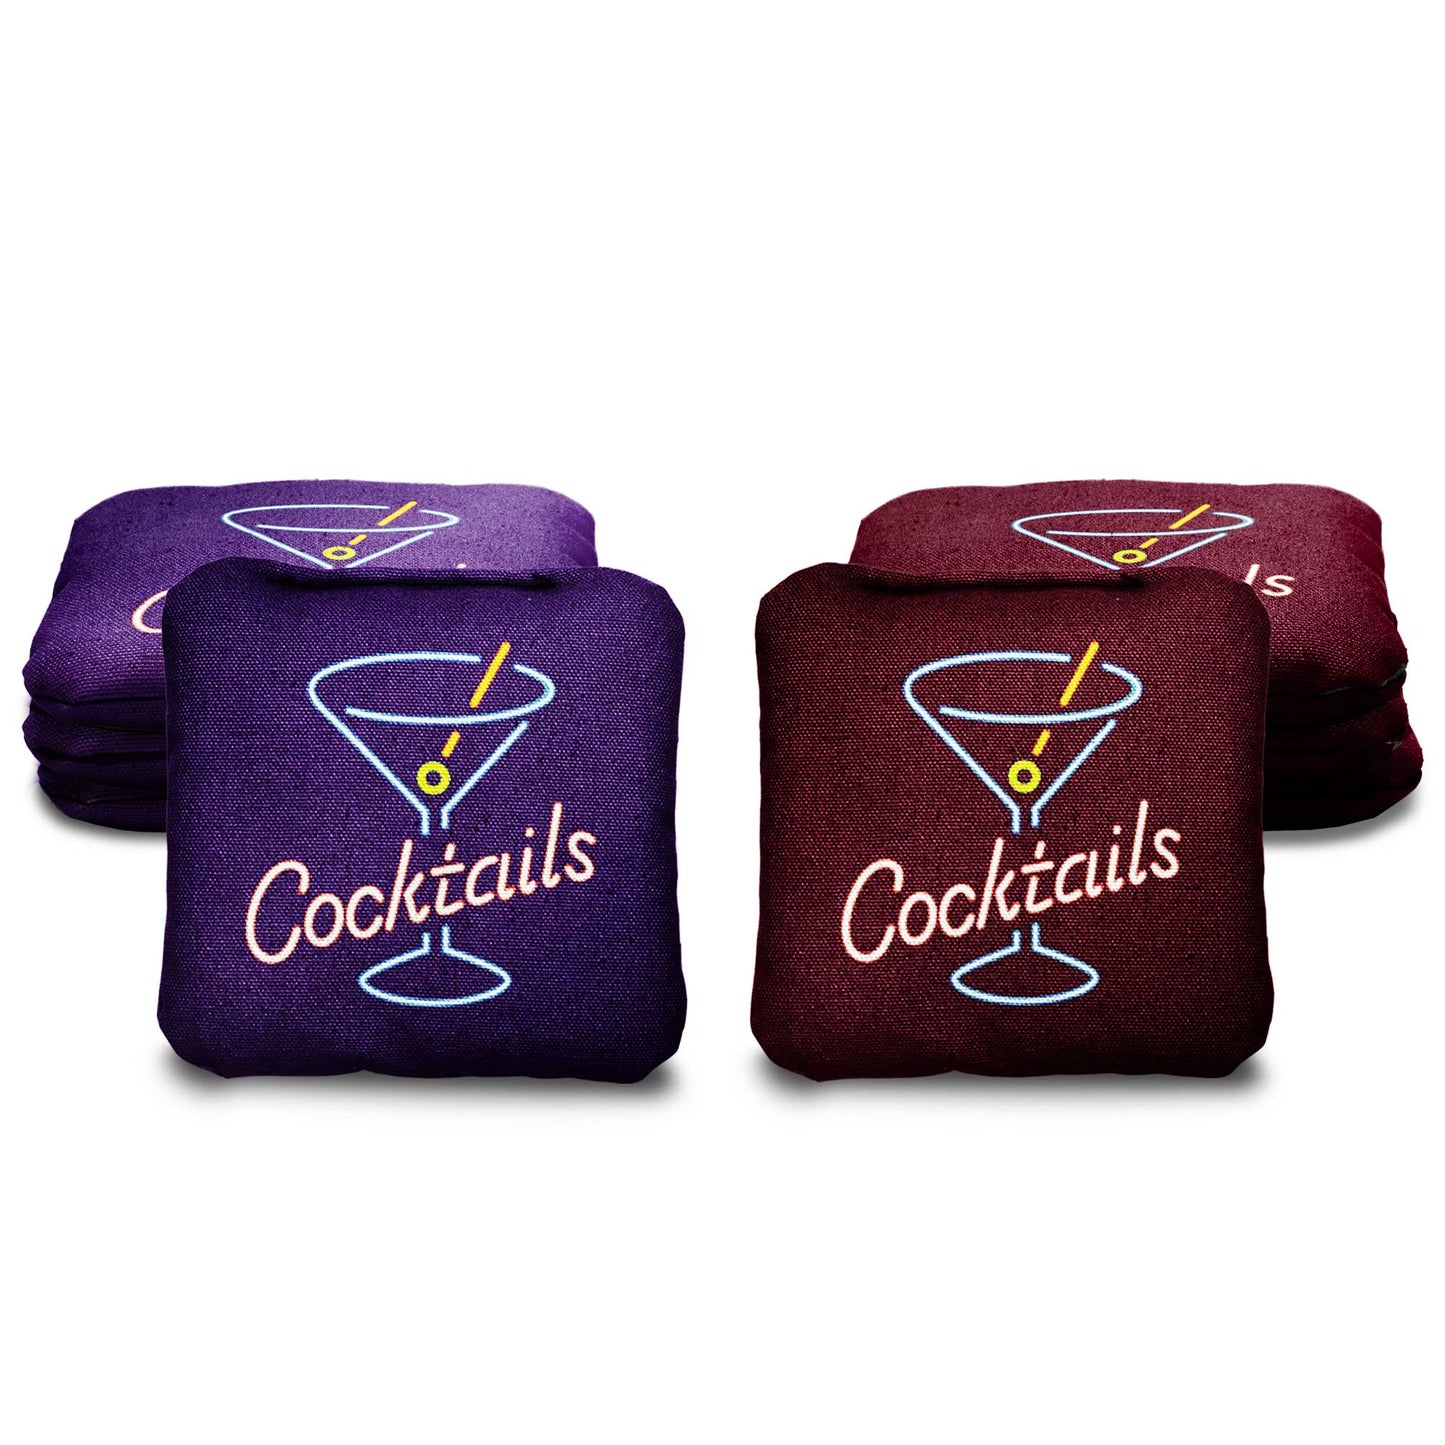 The Neon Cocktails - 8 Cornhole Bags